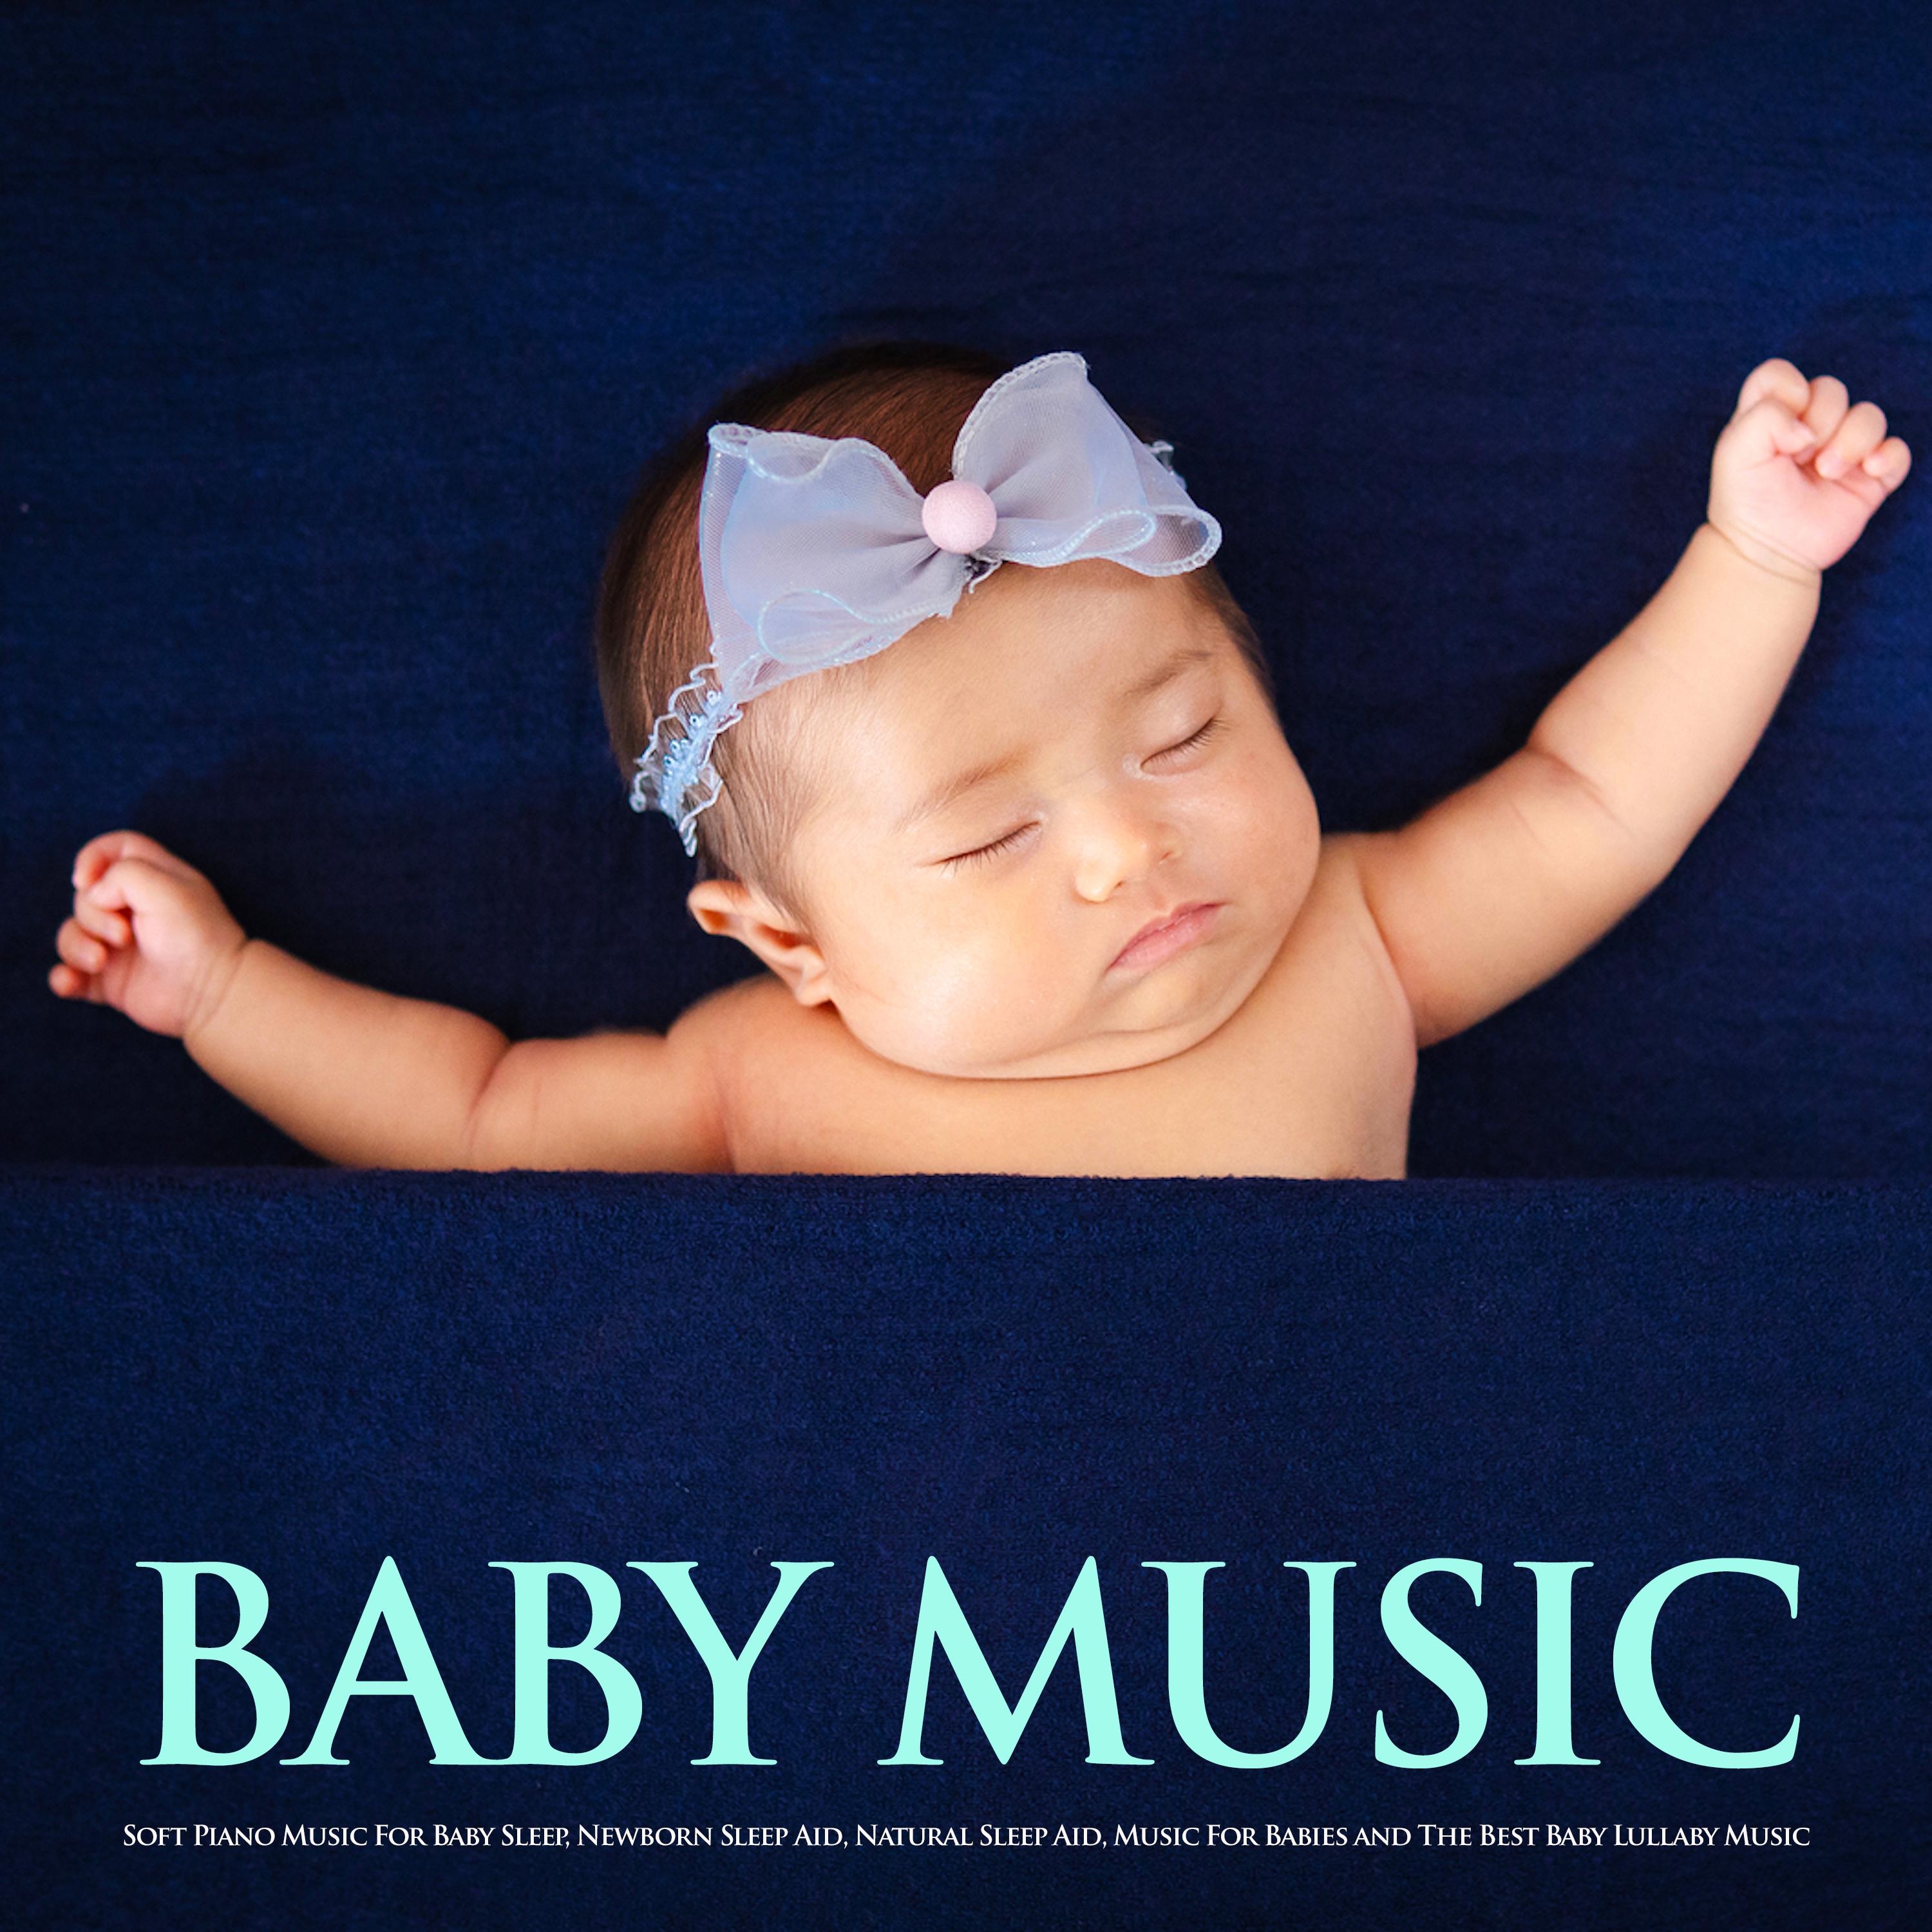 Sleeping Music For Babies